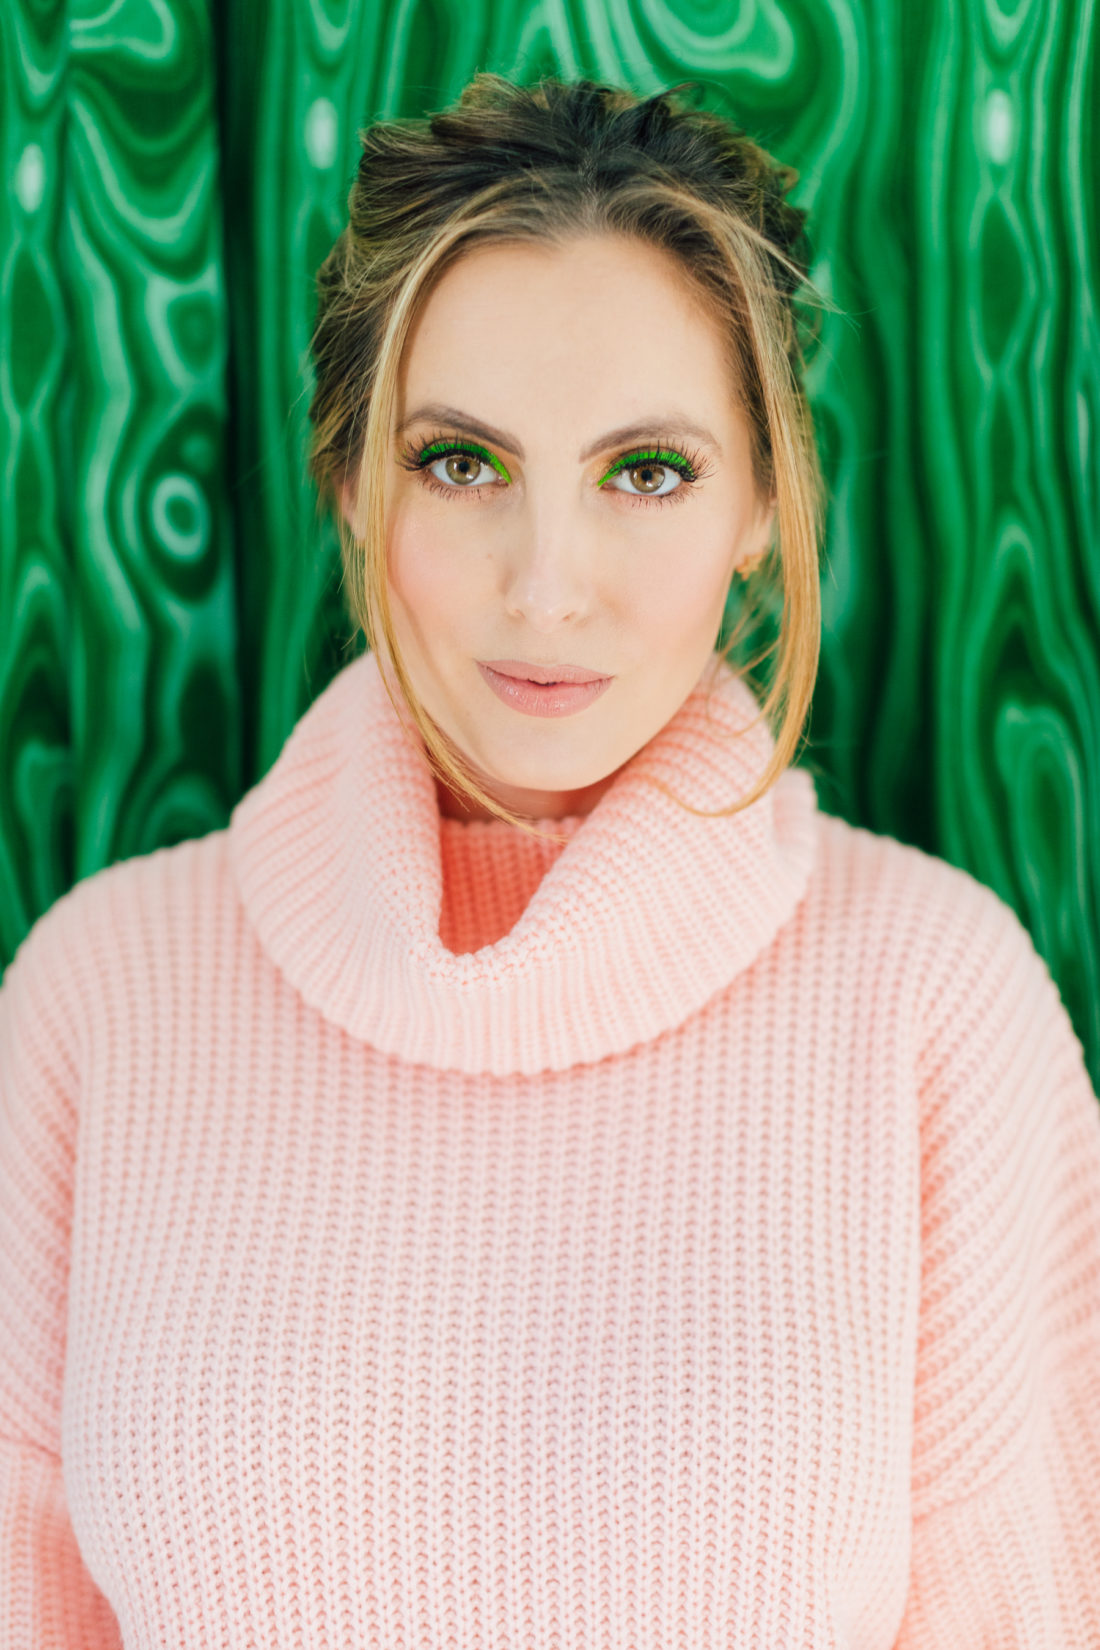 Eva Amurri Martino wears neon green Fenty eyeliner